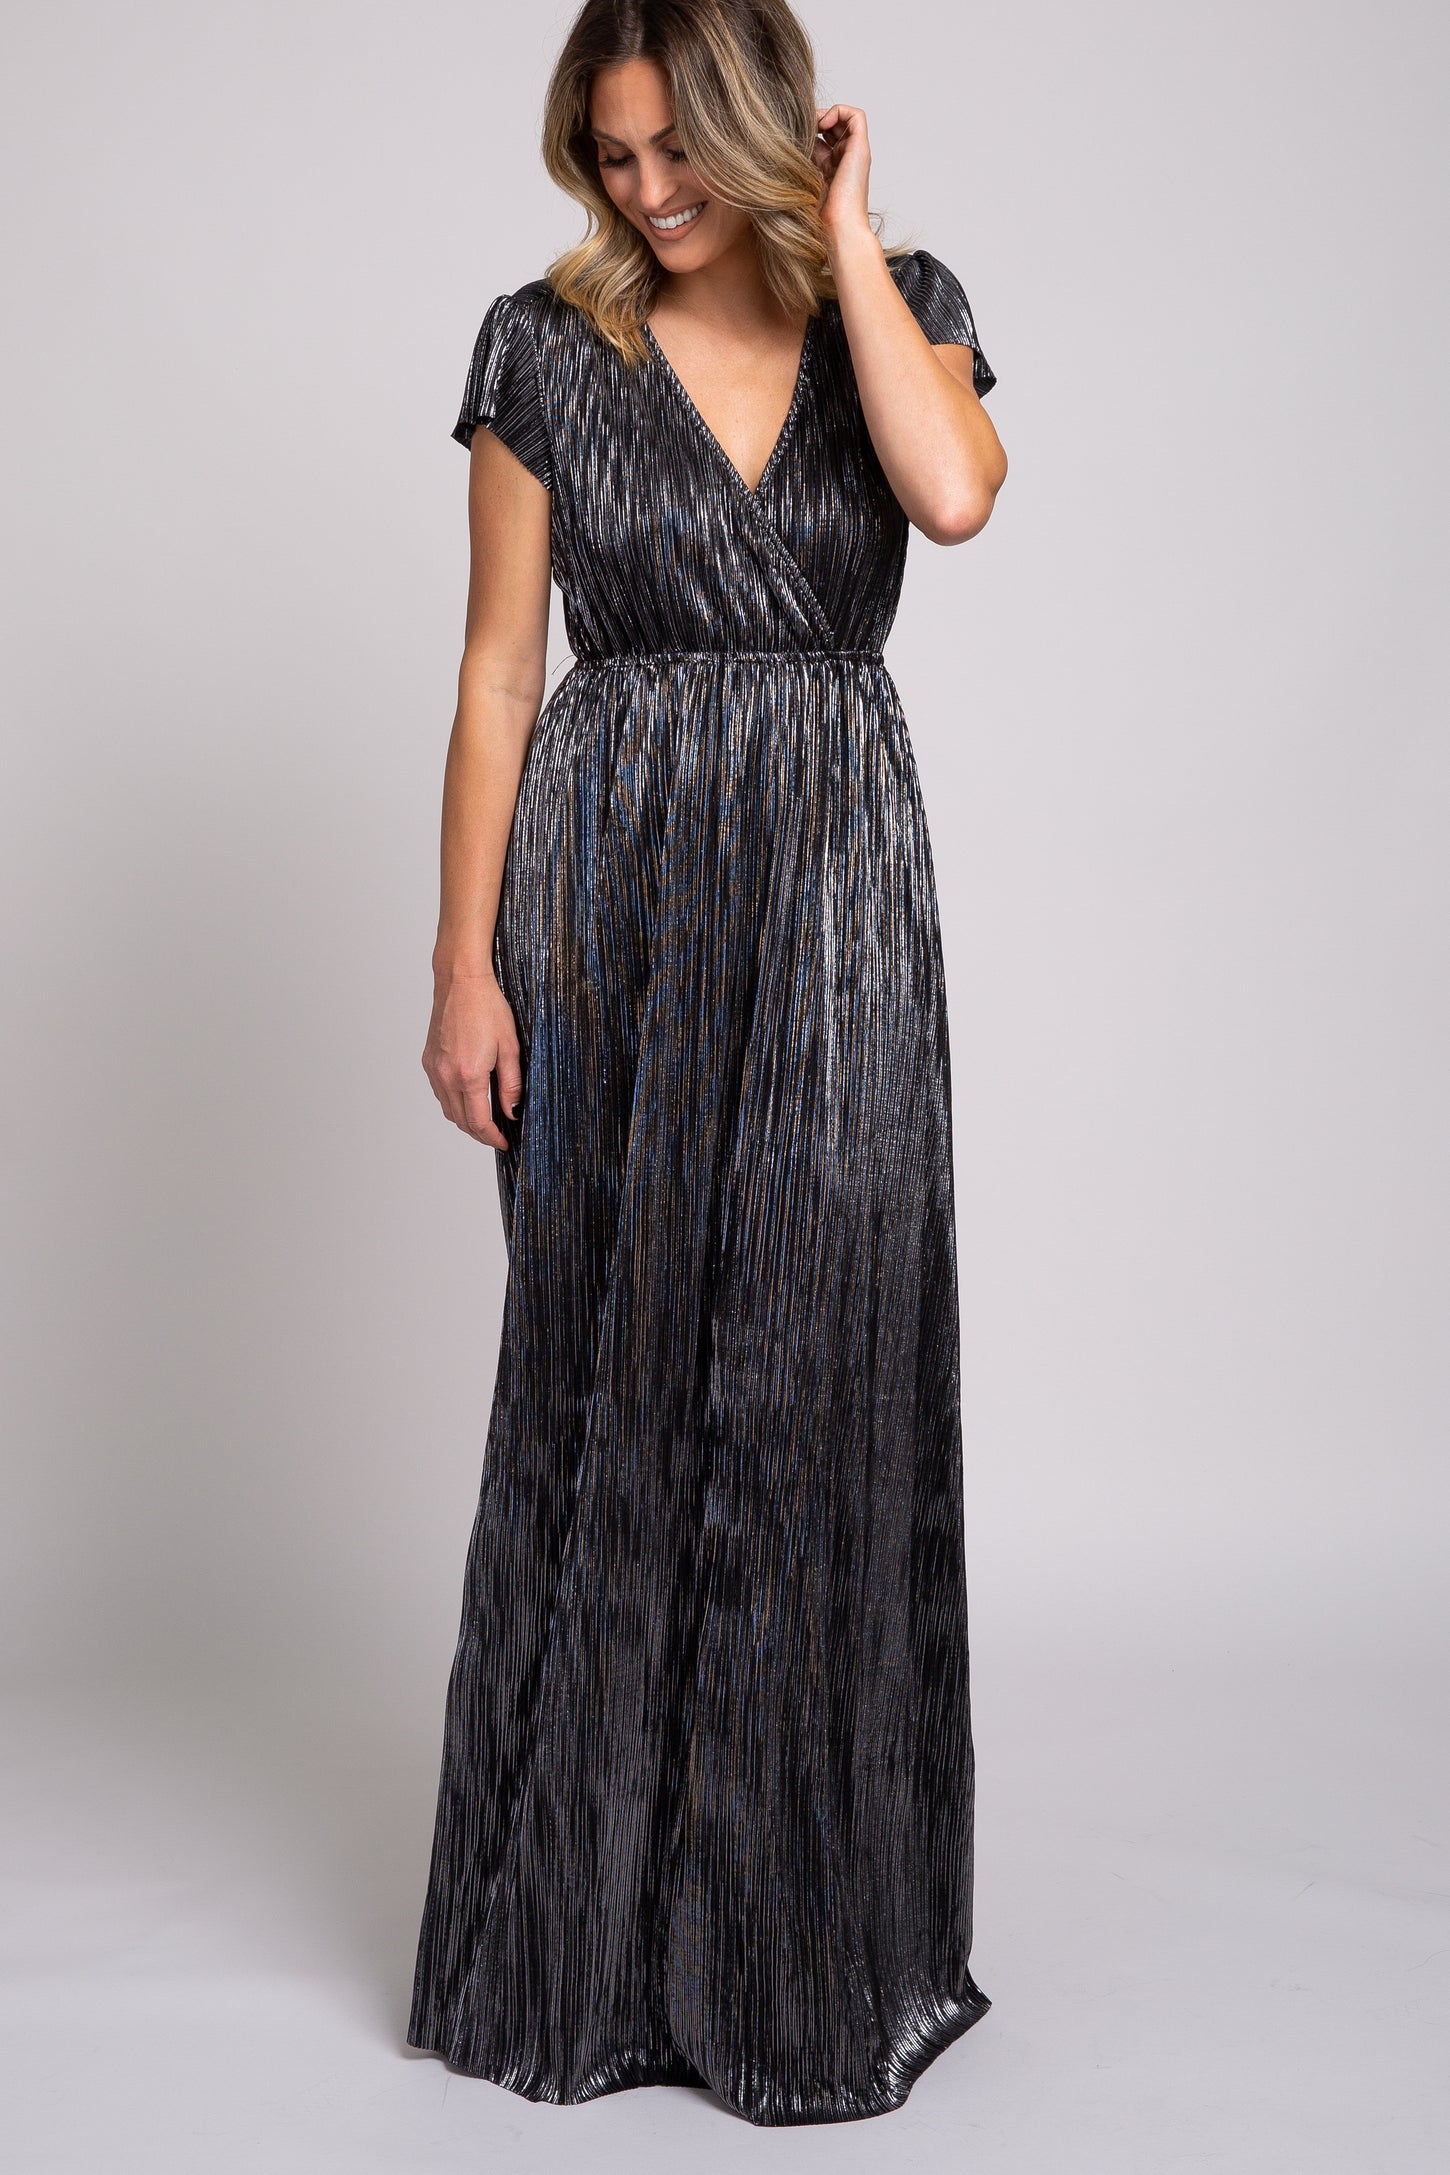 Black Asymmetrical Shimmer Gown - Anjini Sharma